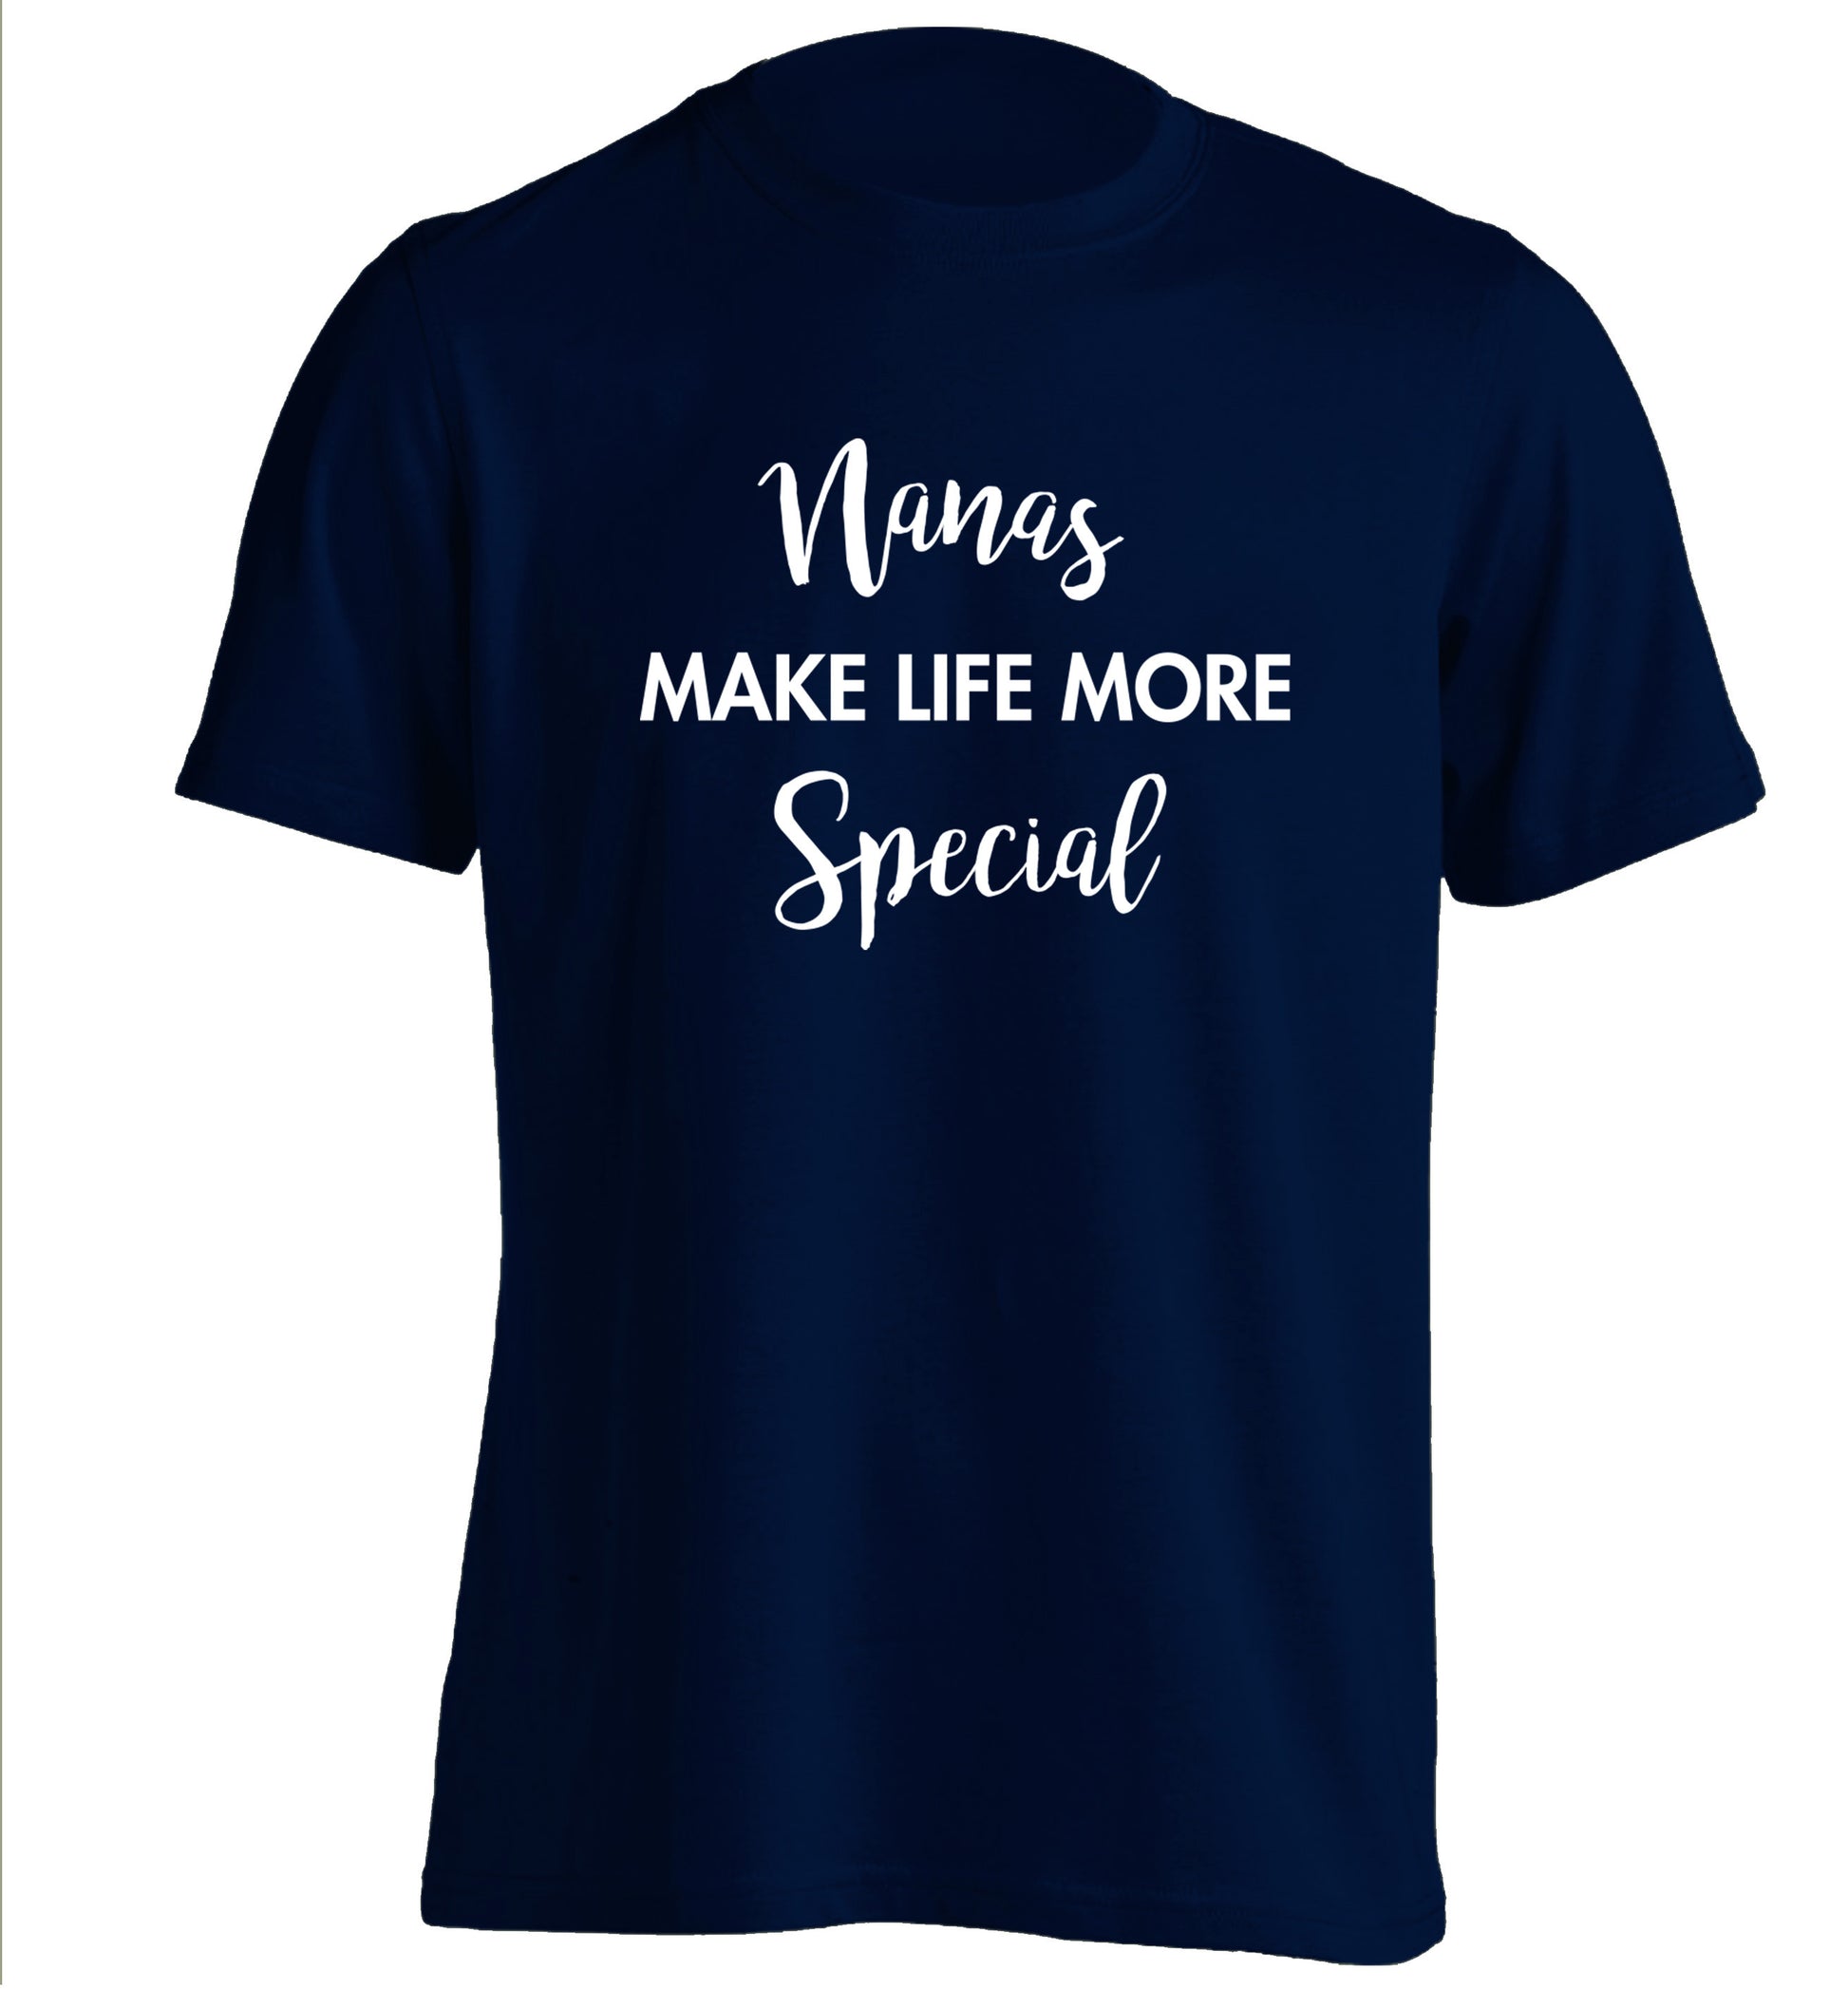 Nanas make life more special adults unisex navy Tshirt 2XL